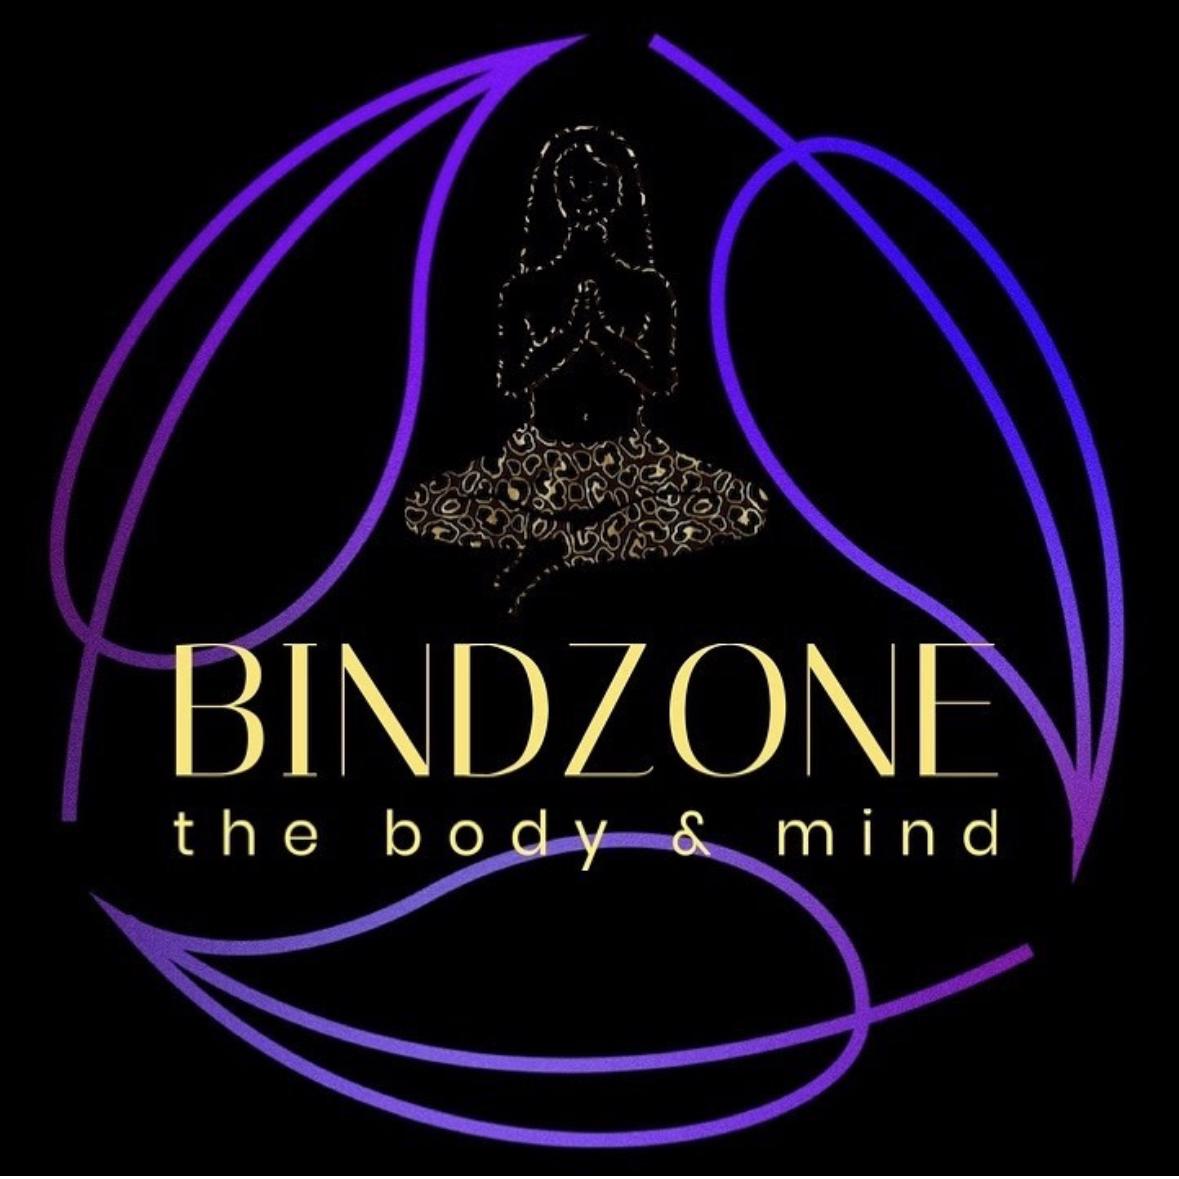 BINDZONE's images